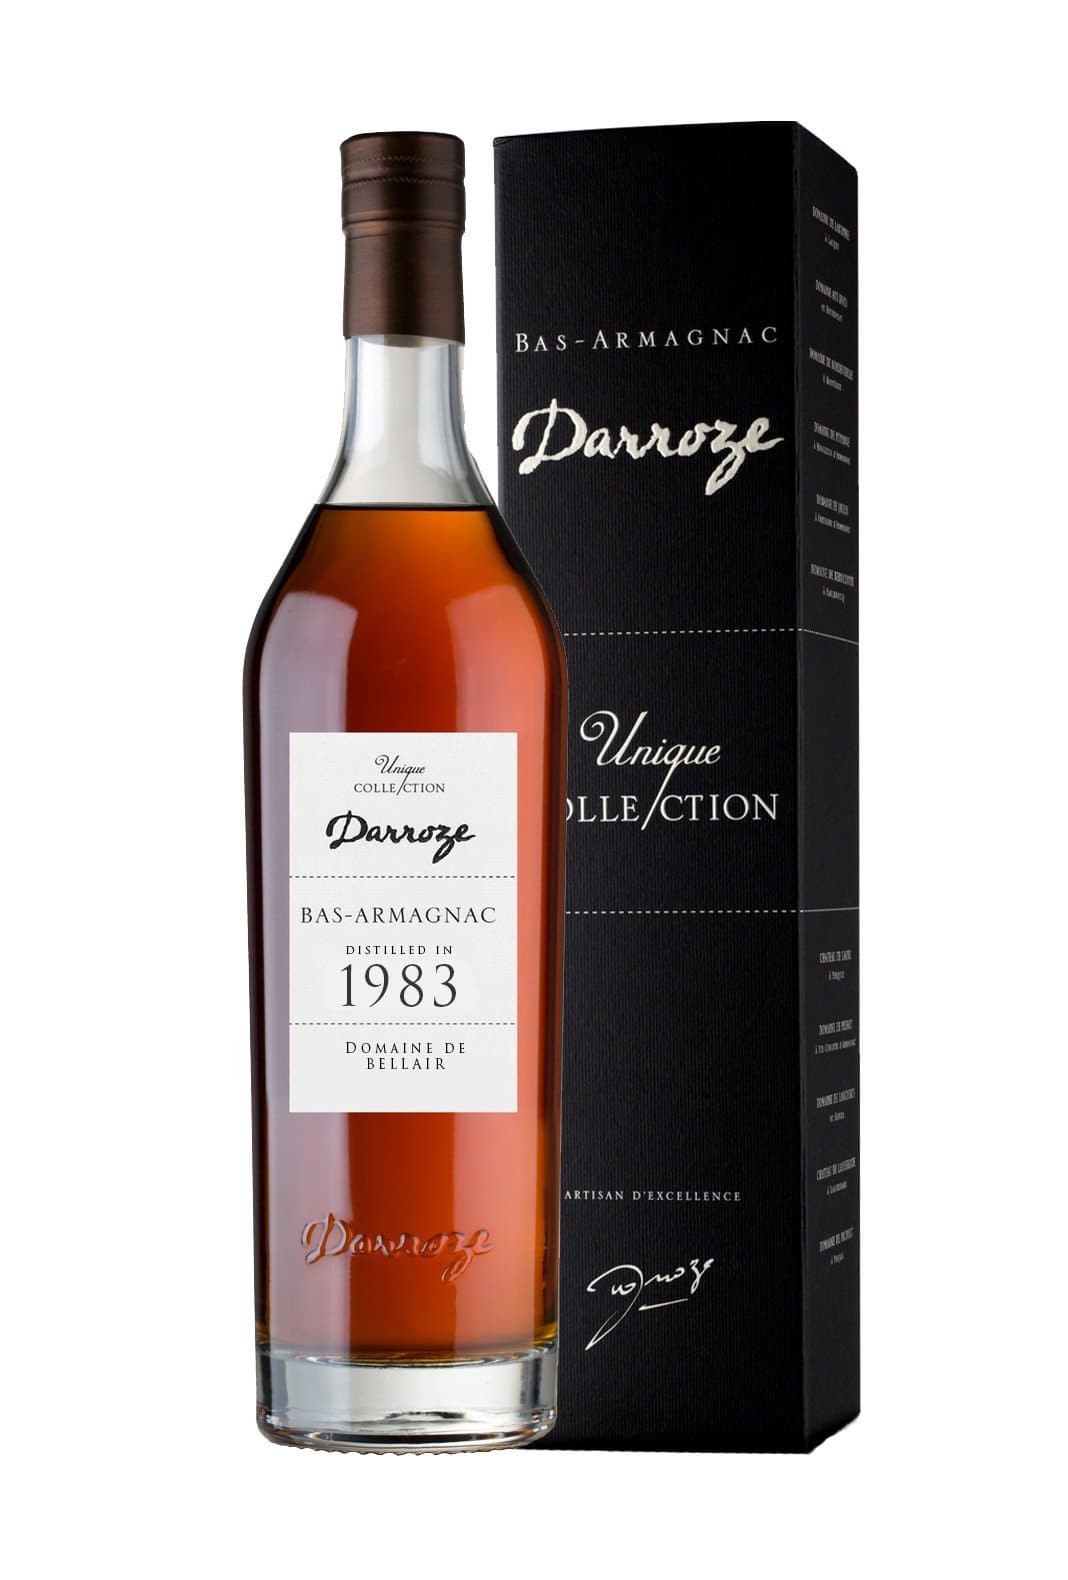 Darroze 1983 Bellair Grand Bas Armagnac 50% 700ml | Brandy | Shop online at Spirits of France